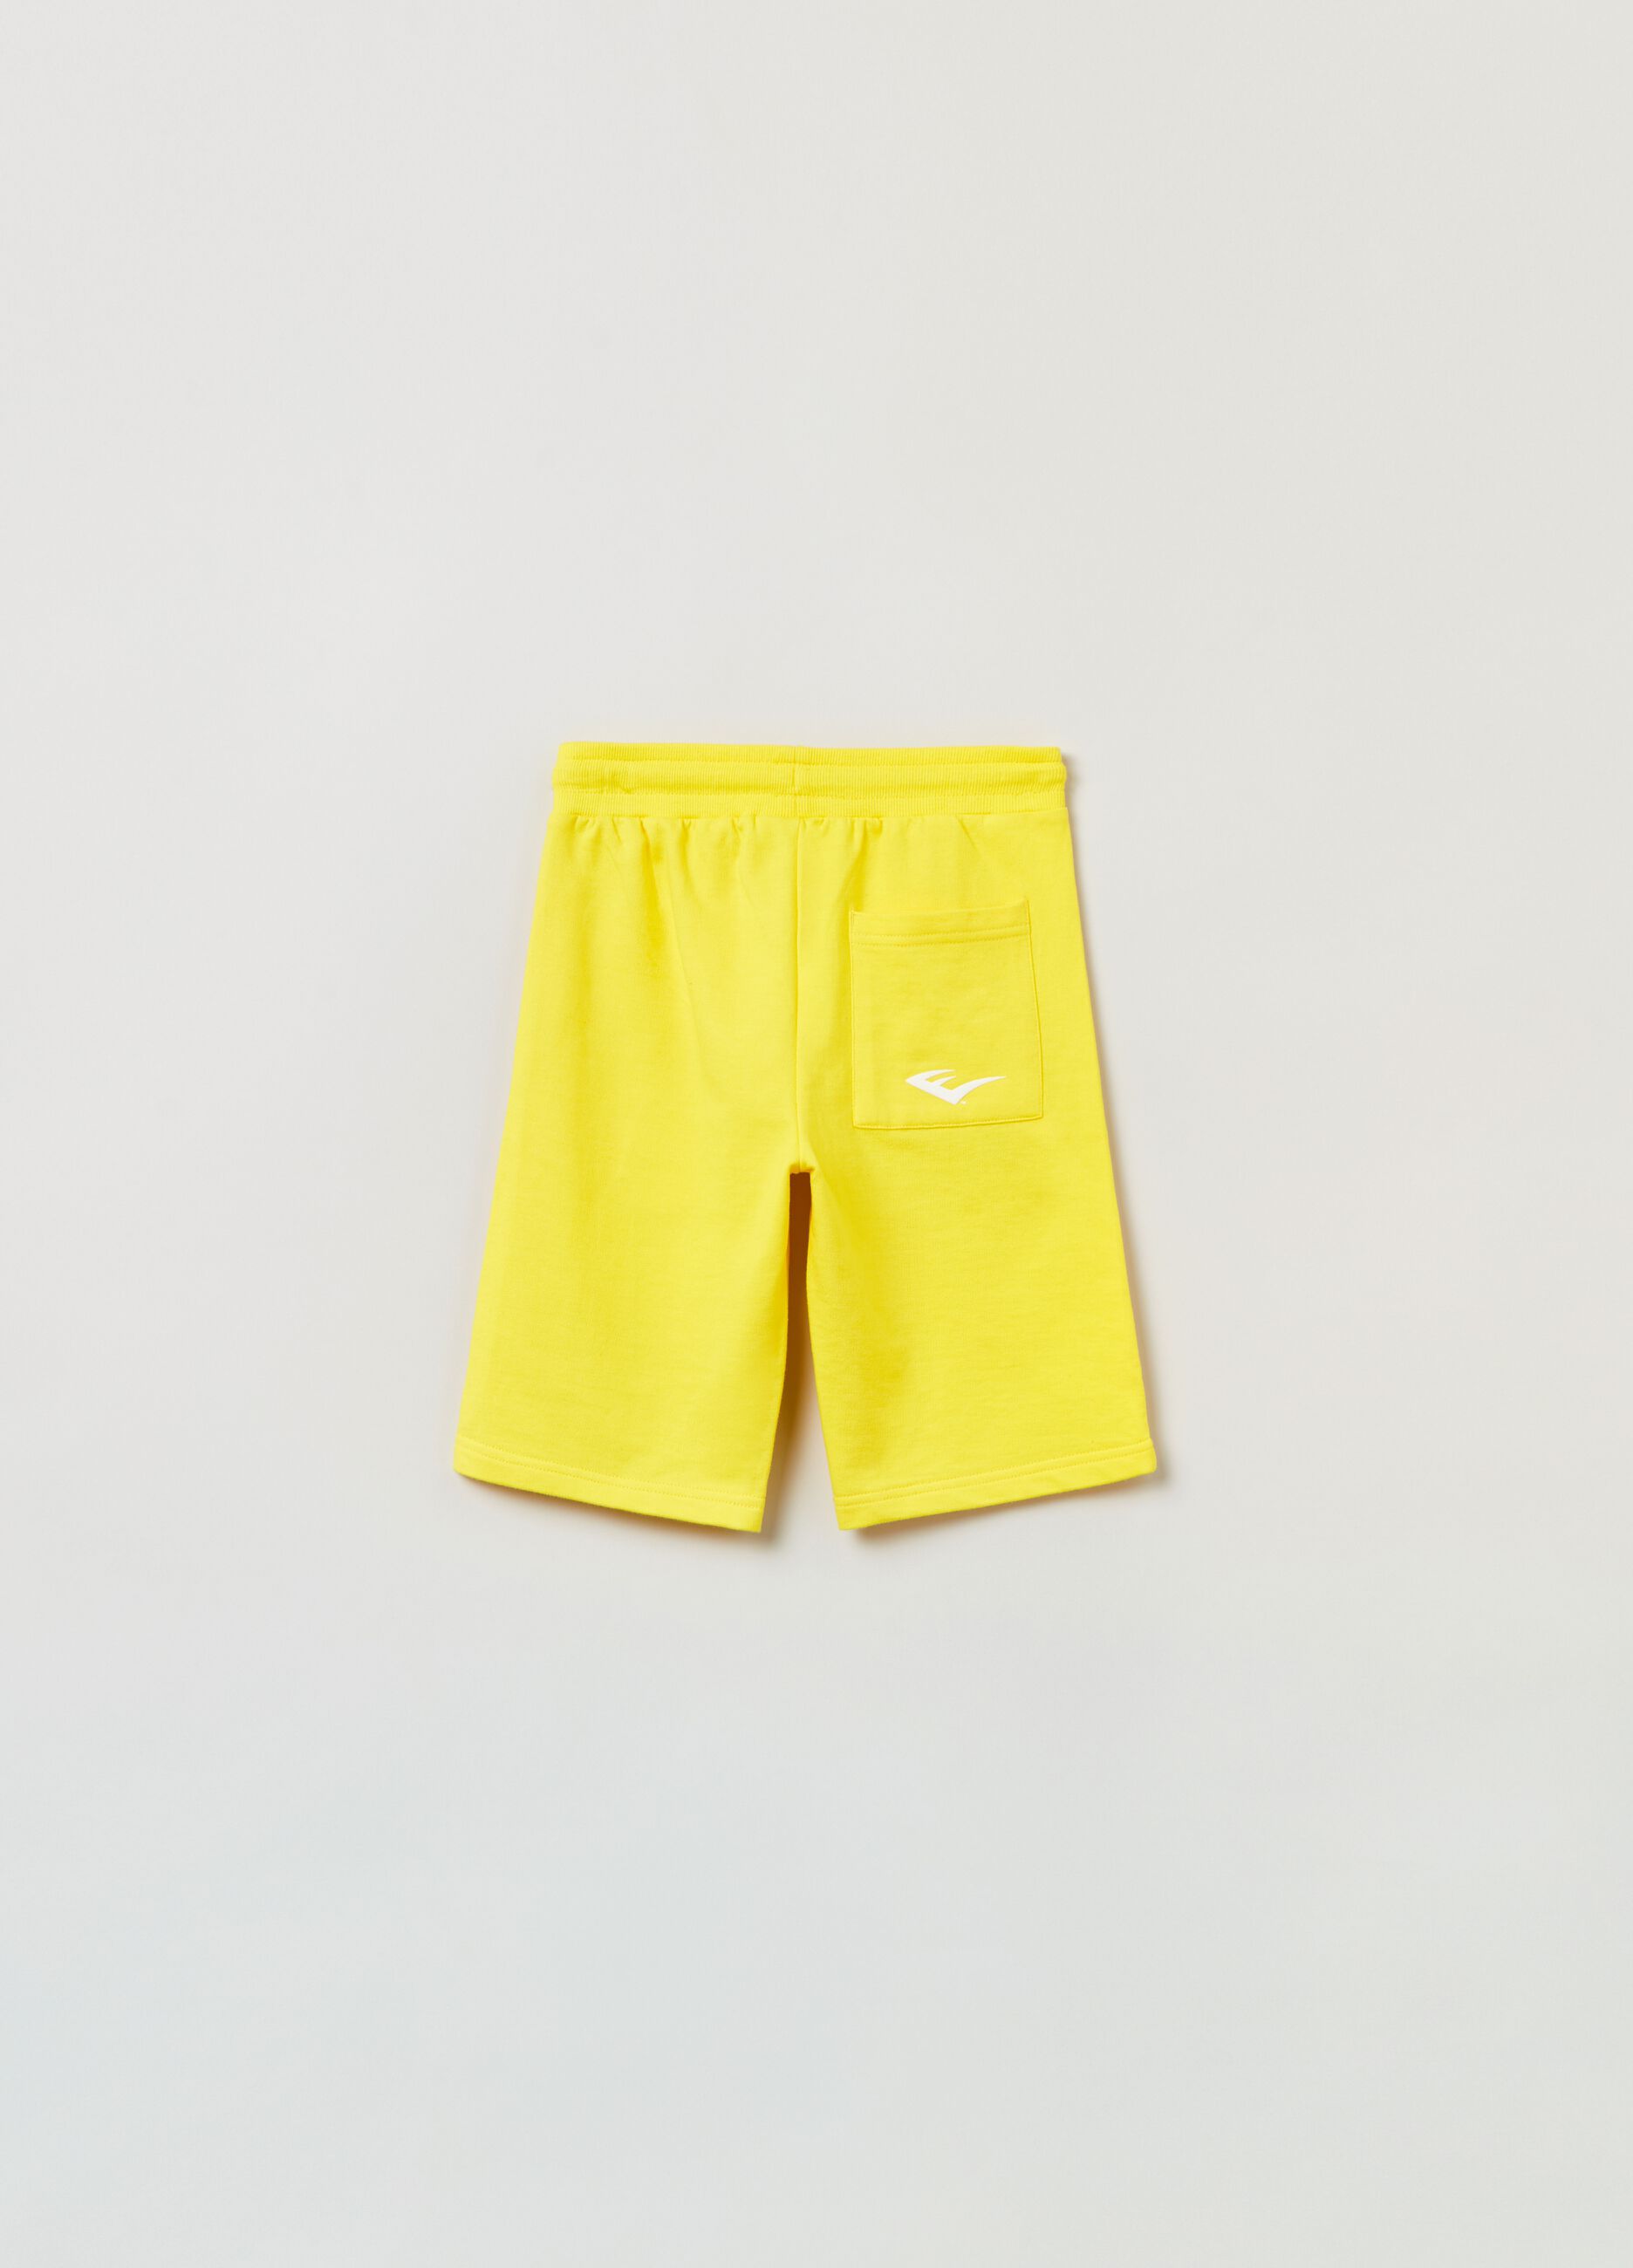 Everlast cotton Bermuda shorts with drawstring